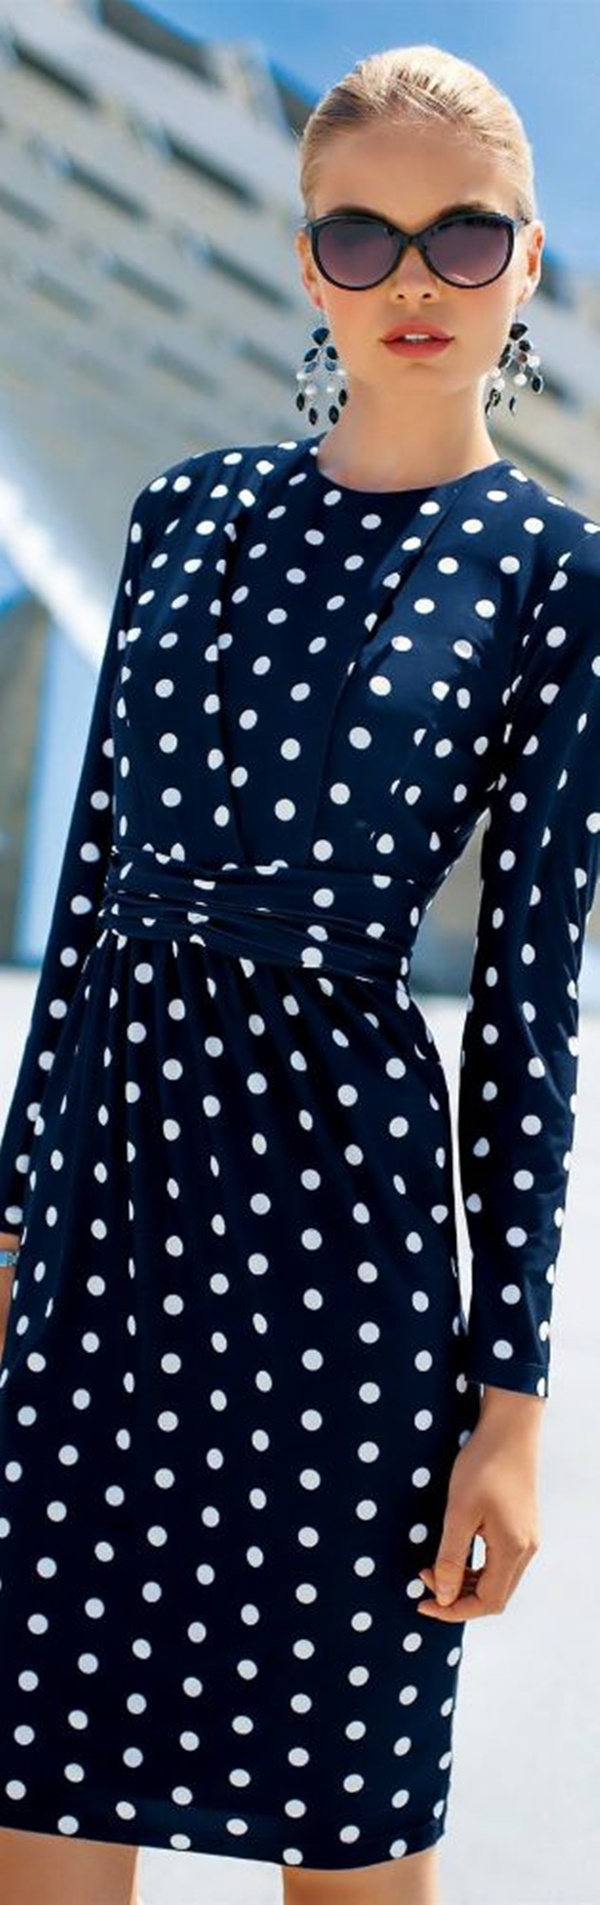 casual polka dot dress